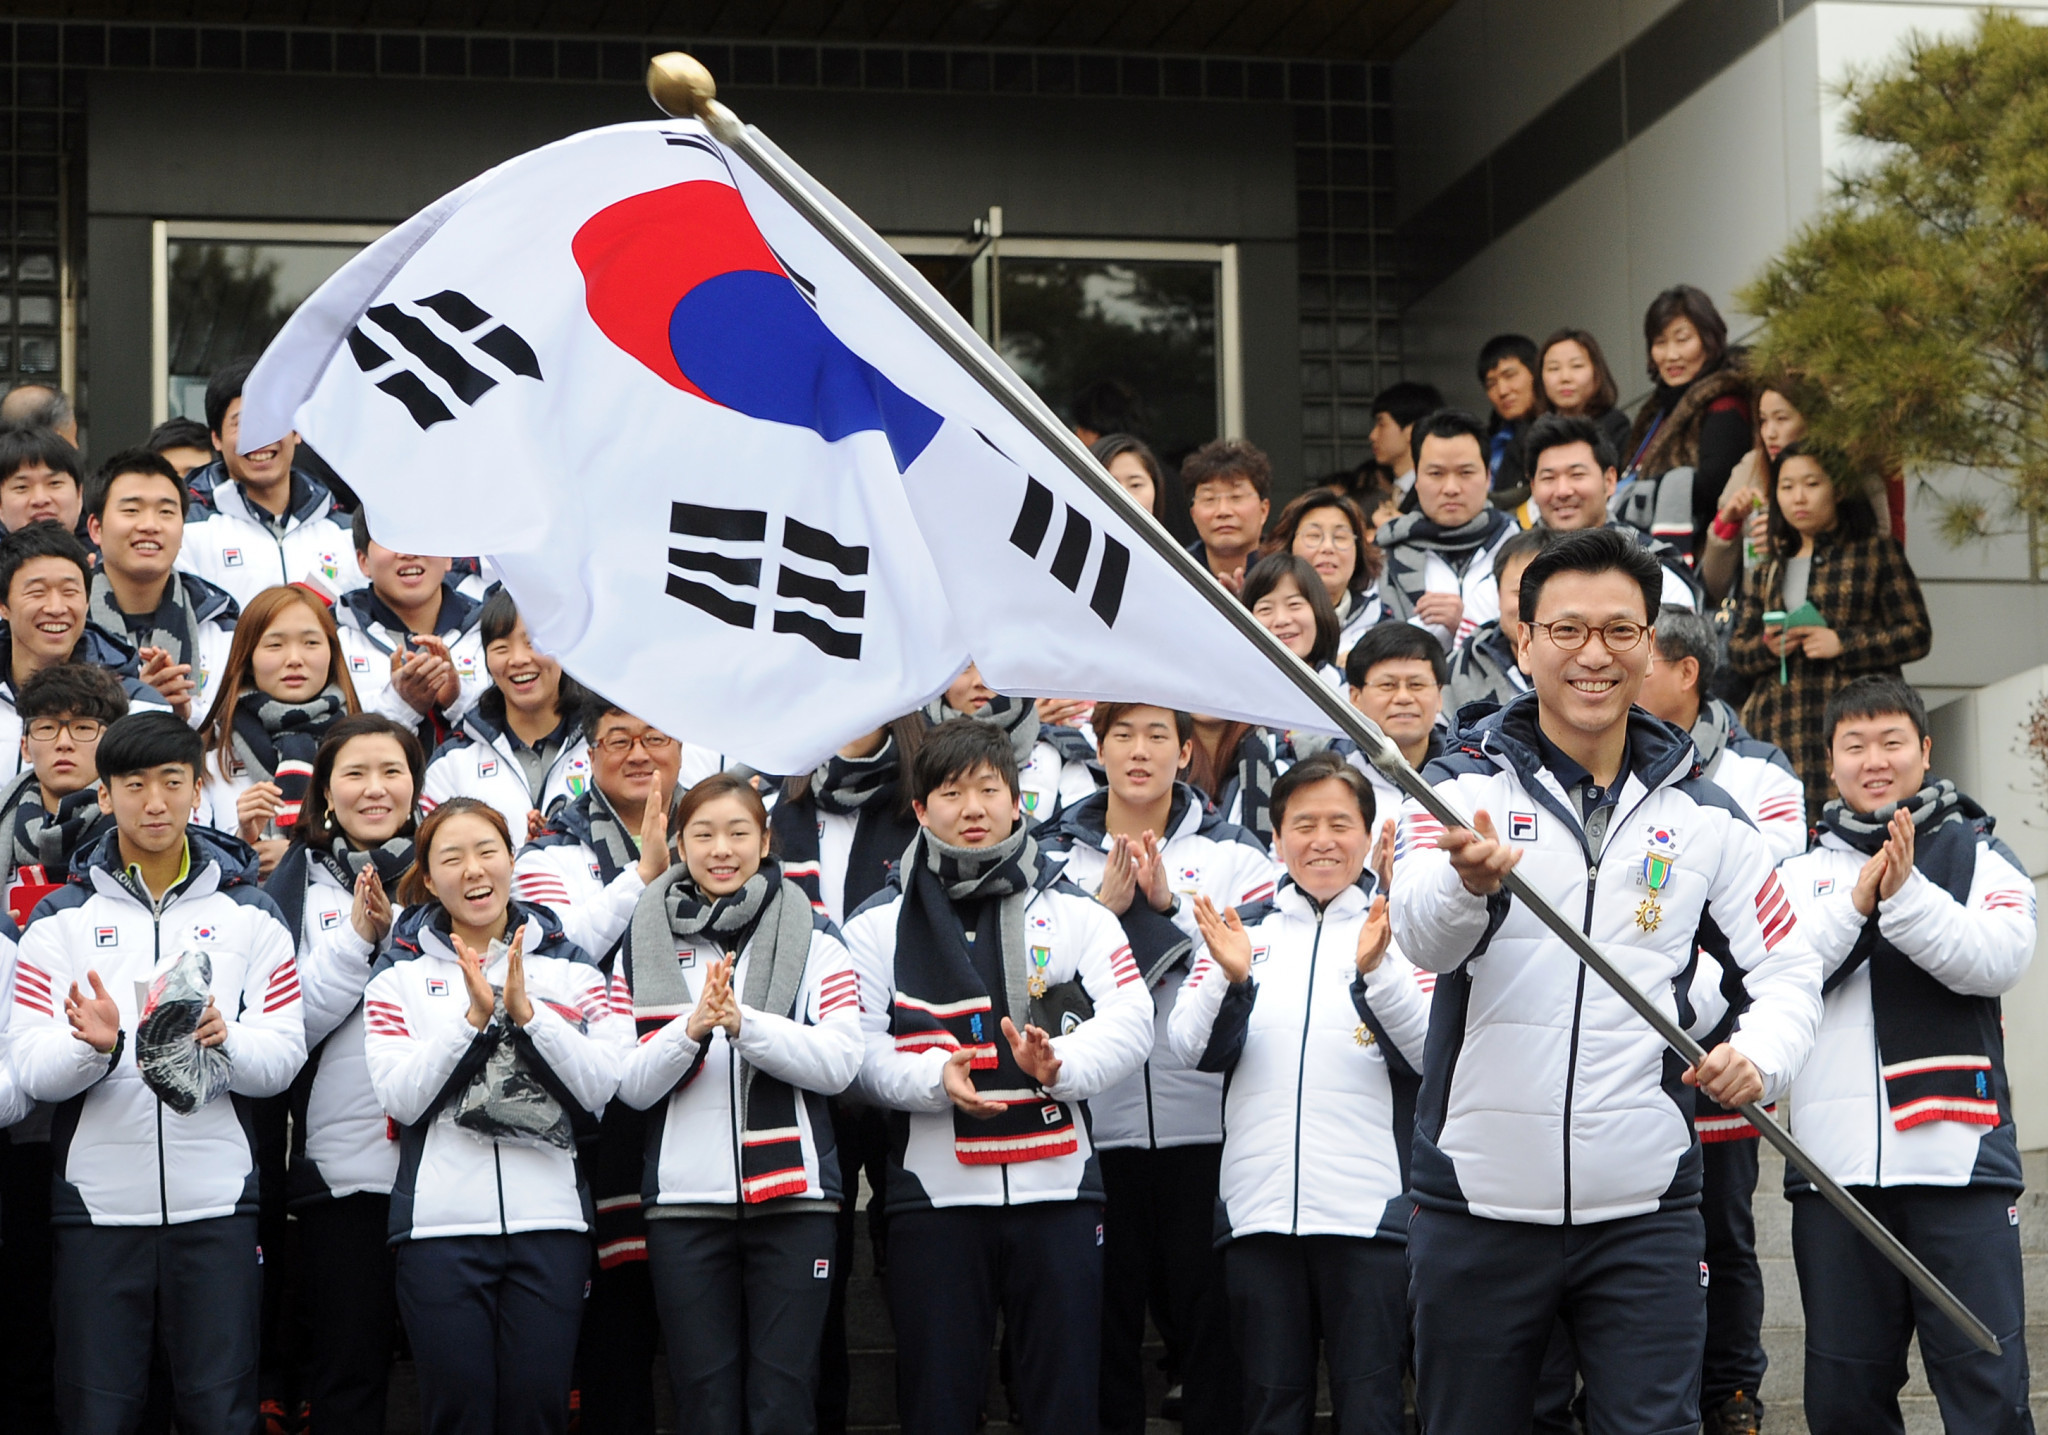 Kim Jae-youl was South Korea's Chef de Mission at Sochi 2014 ©Getty Images